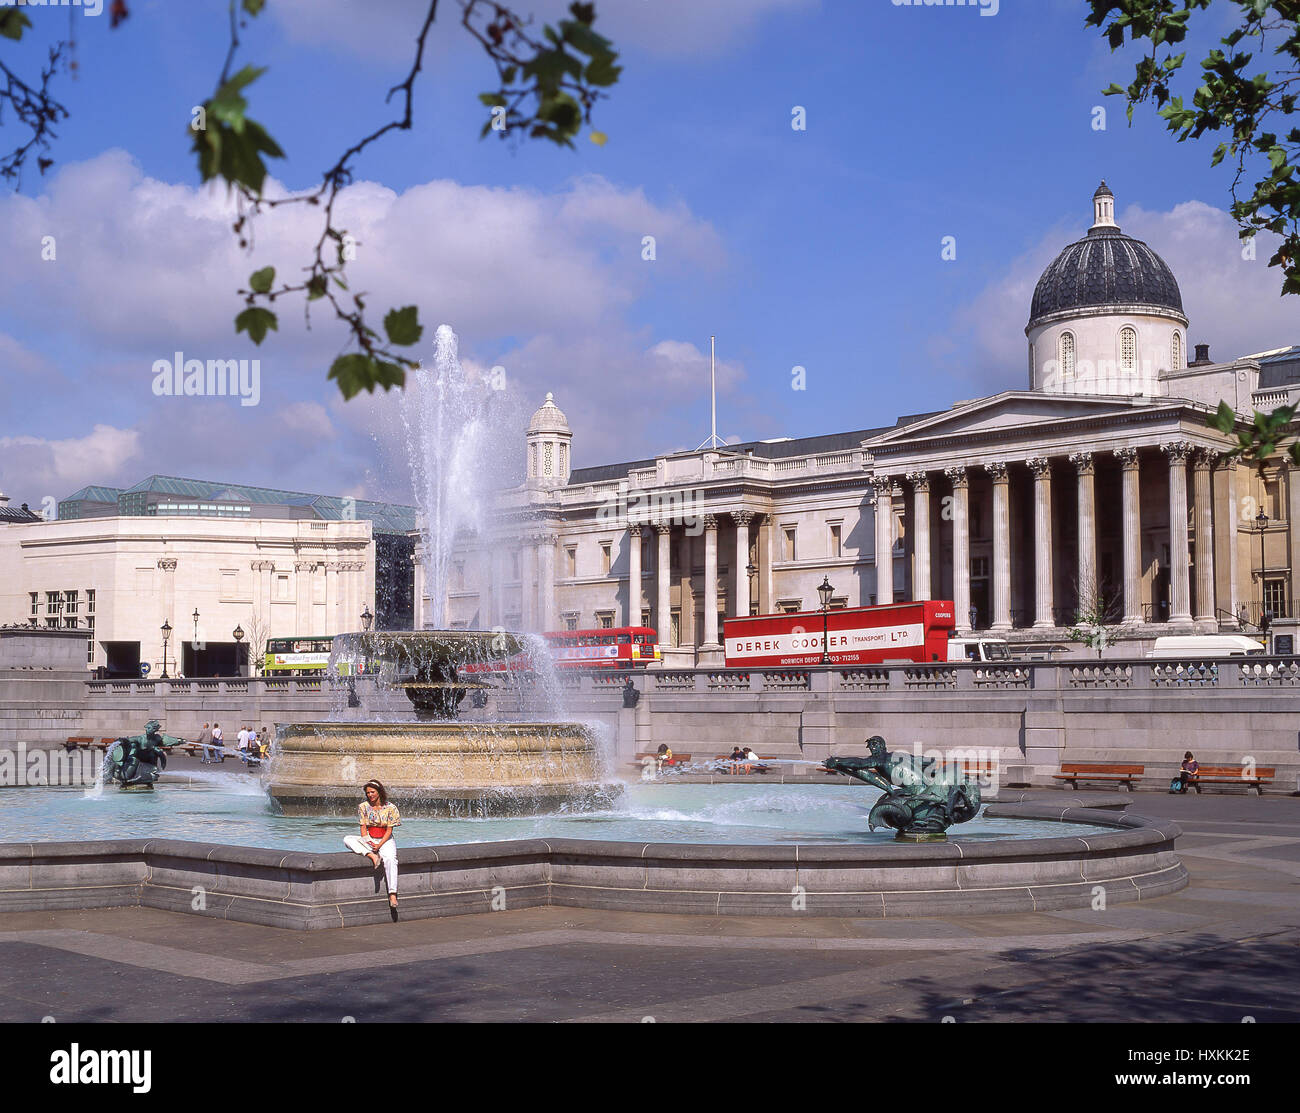 La fontaine et de la National Gallery, Trafalgar Square, City of westminster, Greater London, Angleterre, Royaume-Uni Banque D'Images